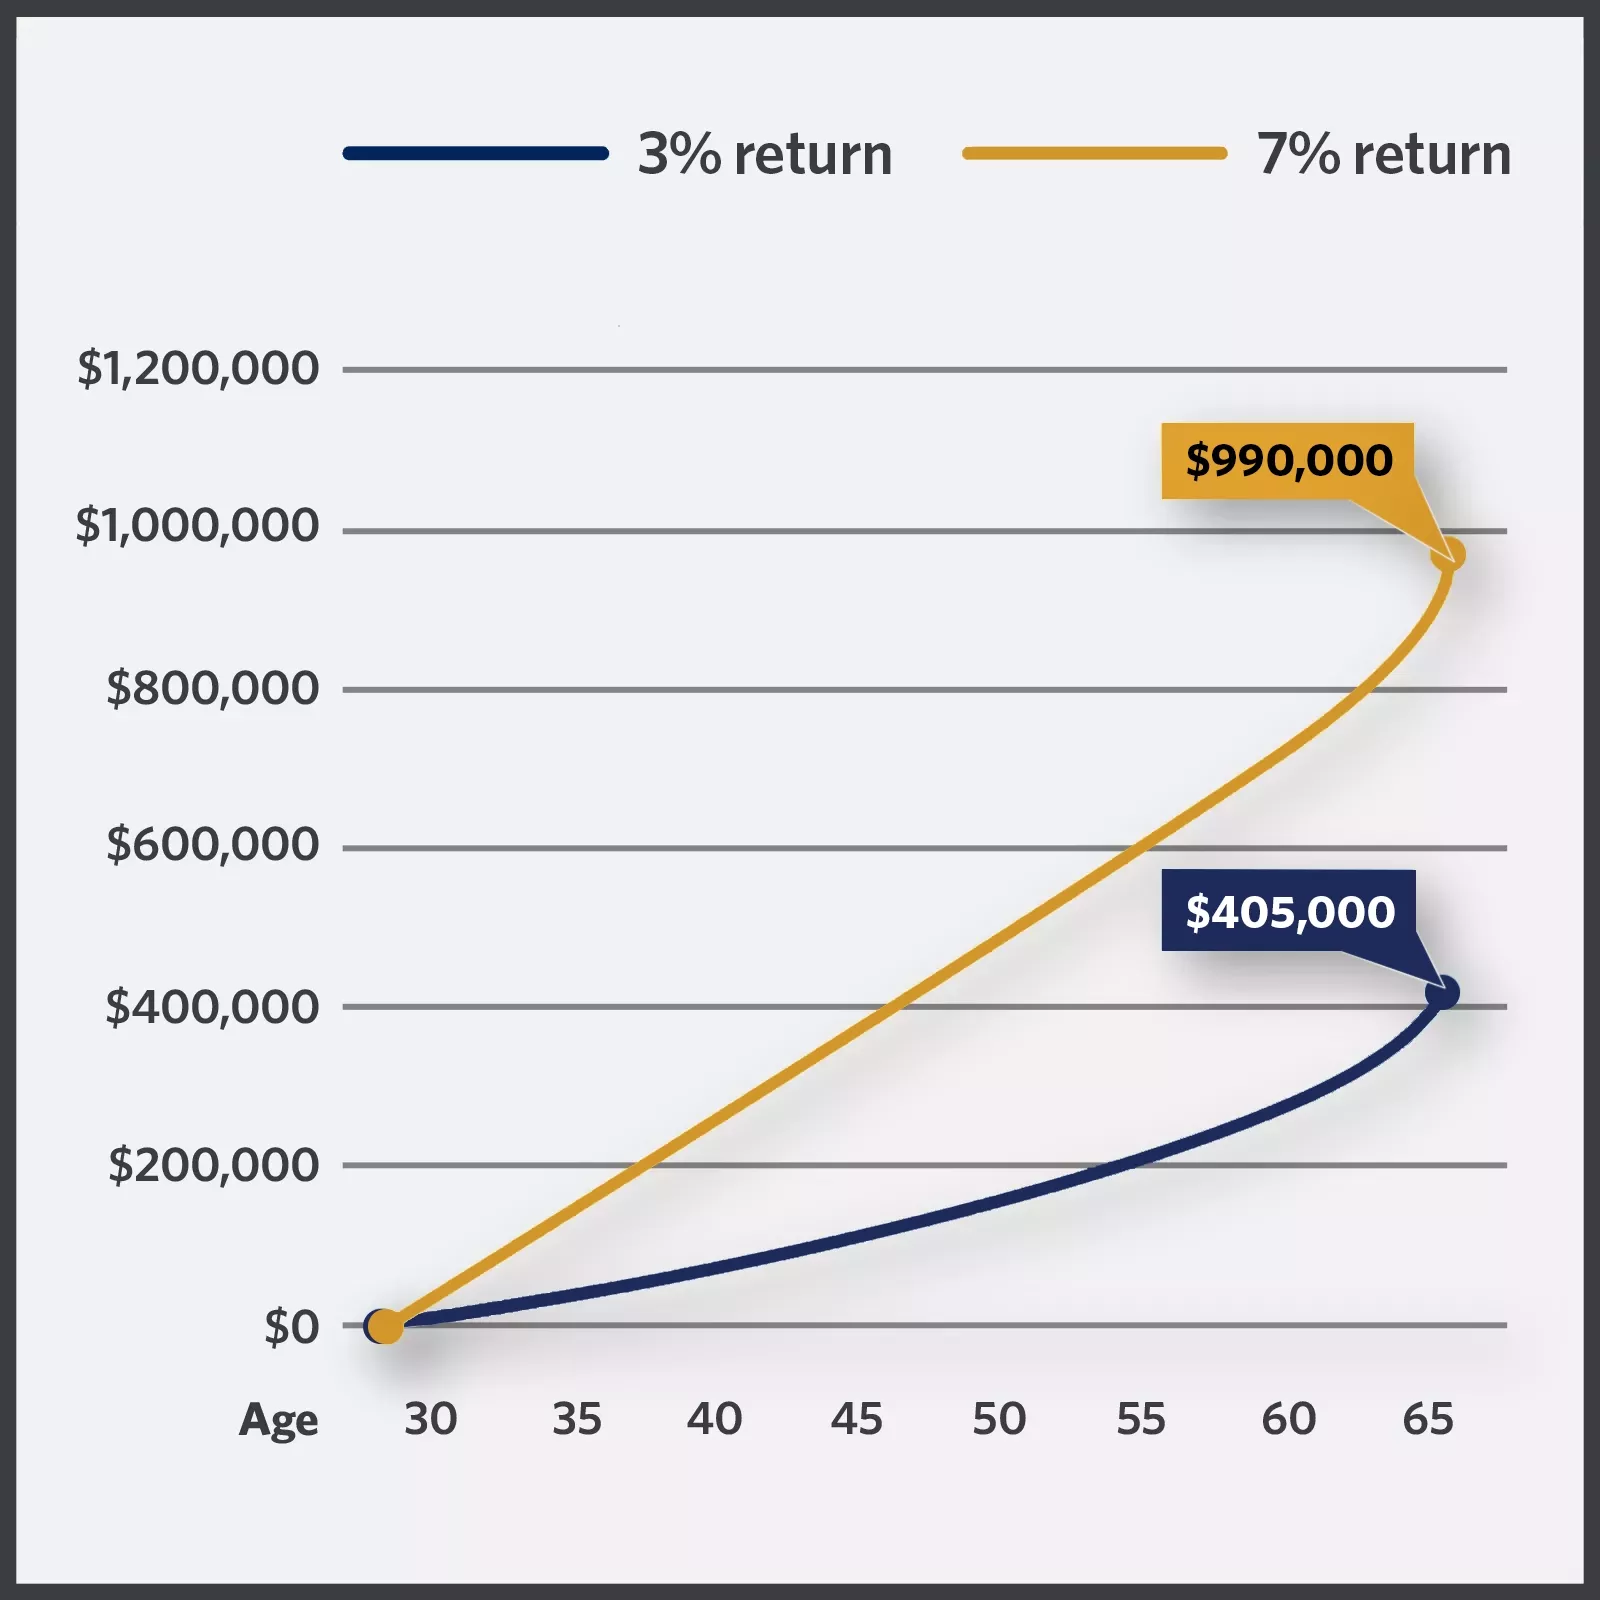  Return vs Contribution chart
